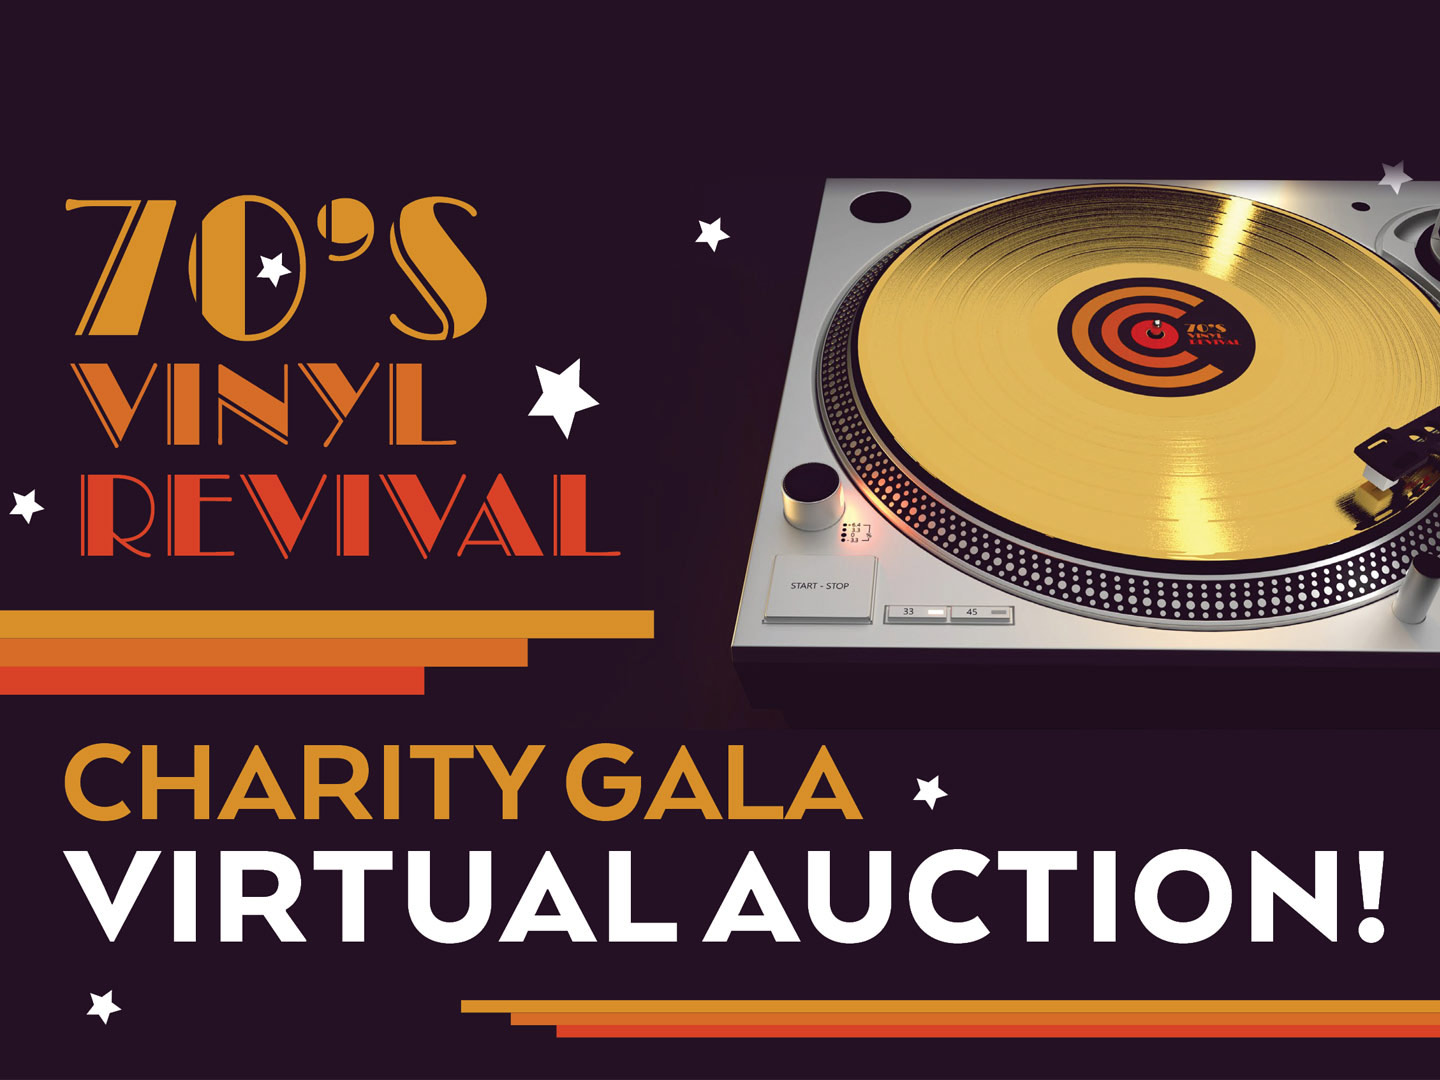 Virtual Auction - Charity Gala 2021